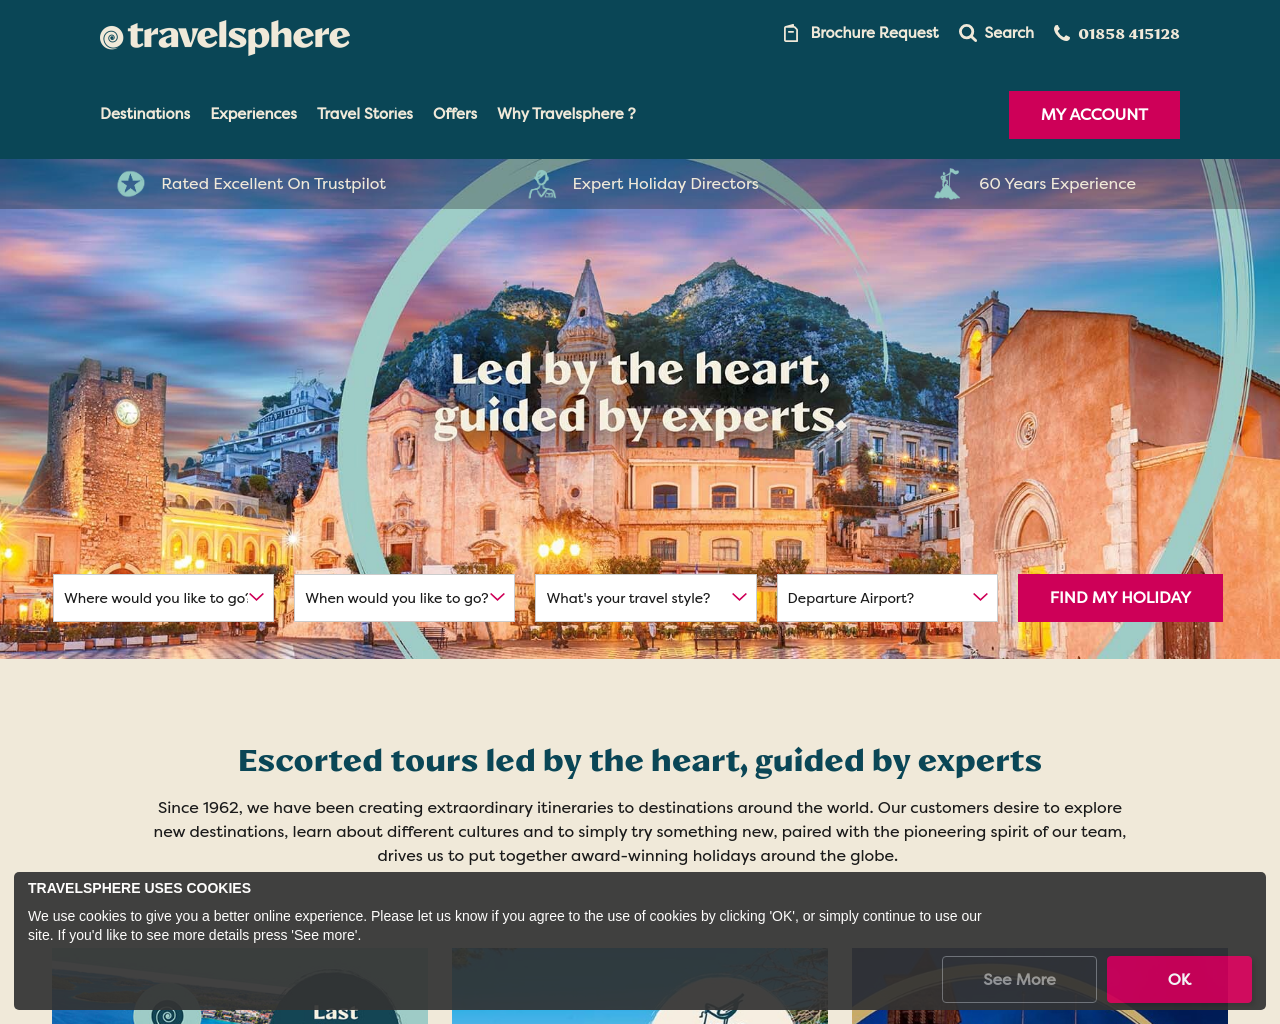 travelsphere.co.uk